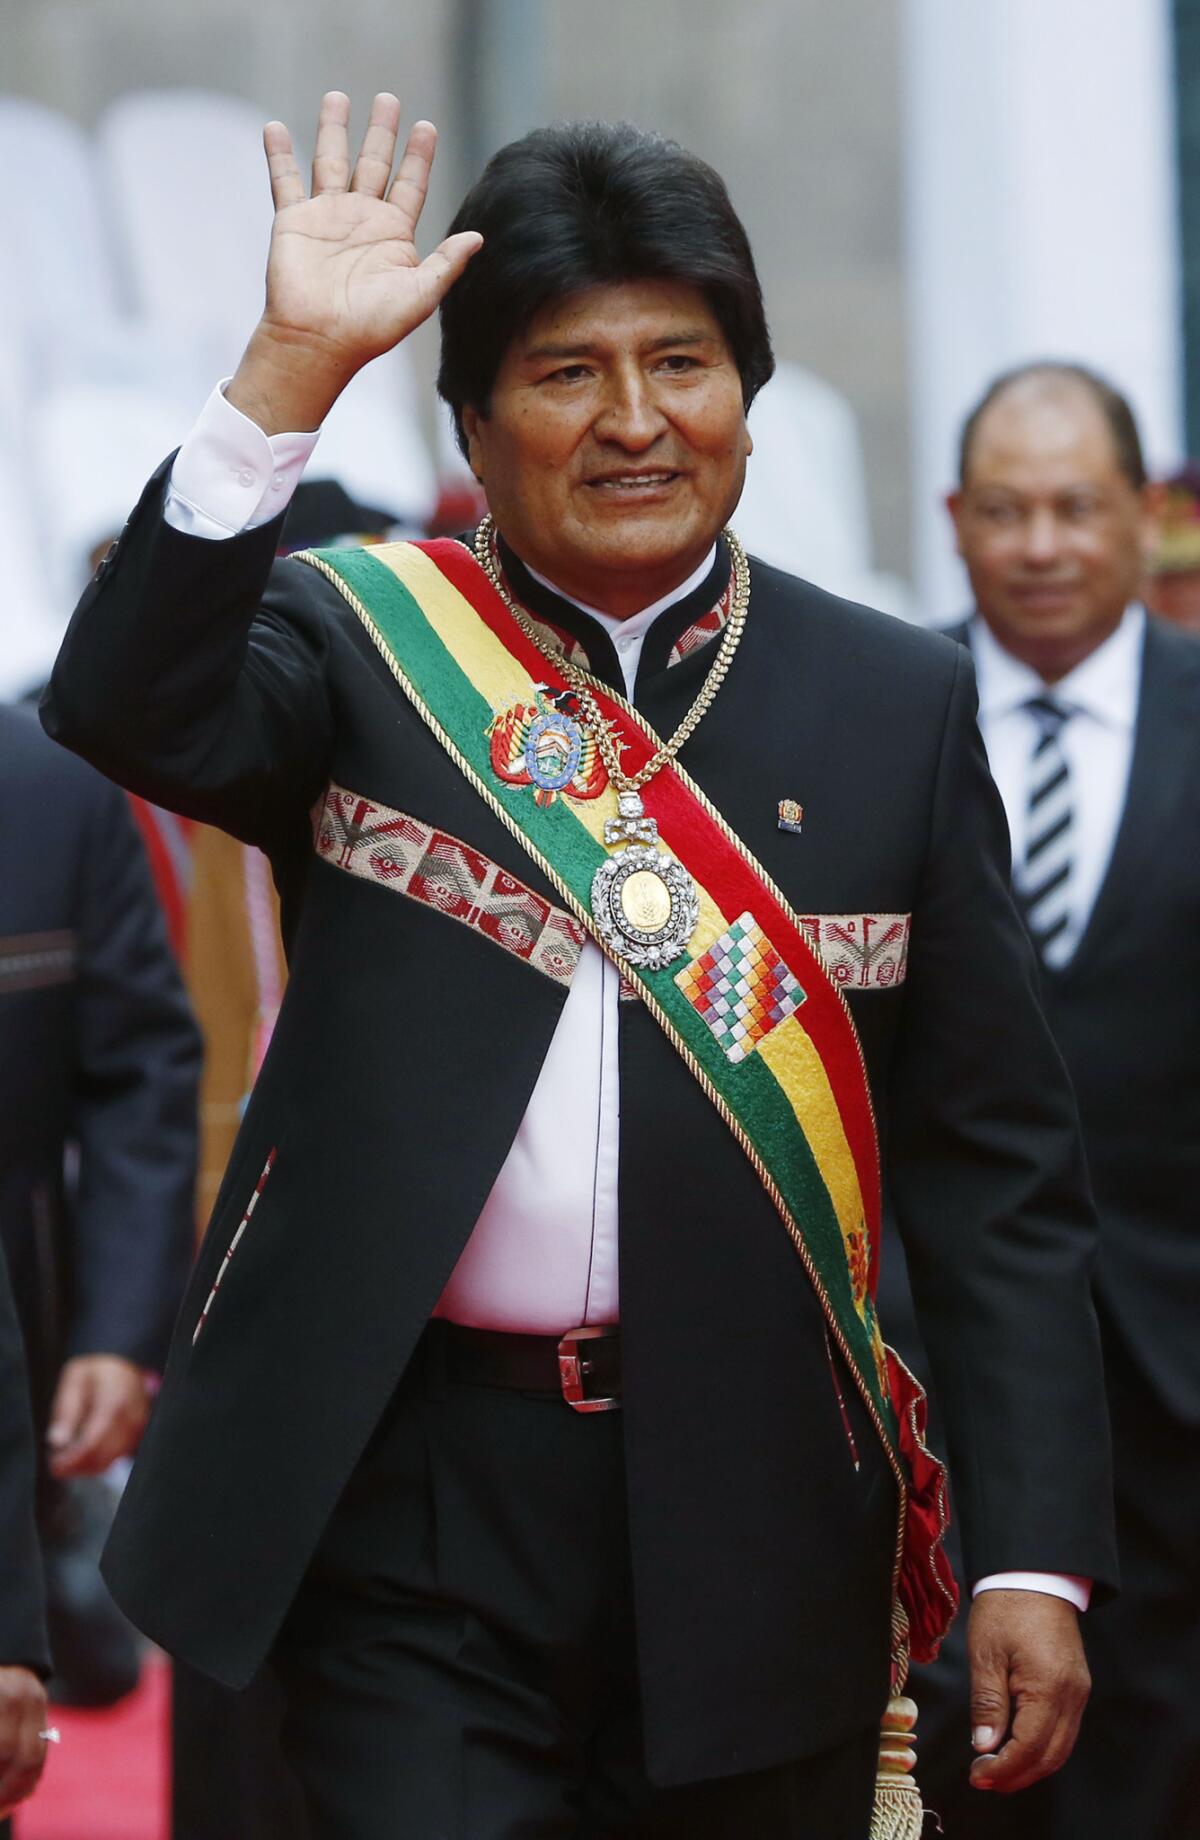 El presidente boliviano Evo Morales. (Foto AP/Juan Karita)